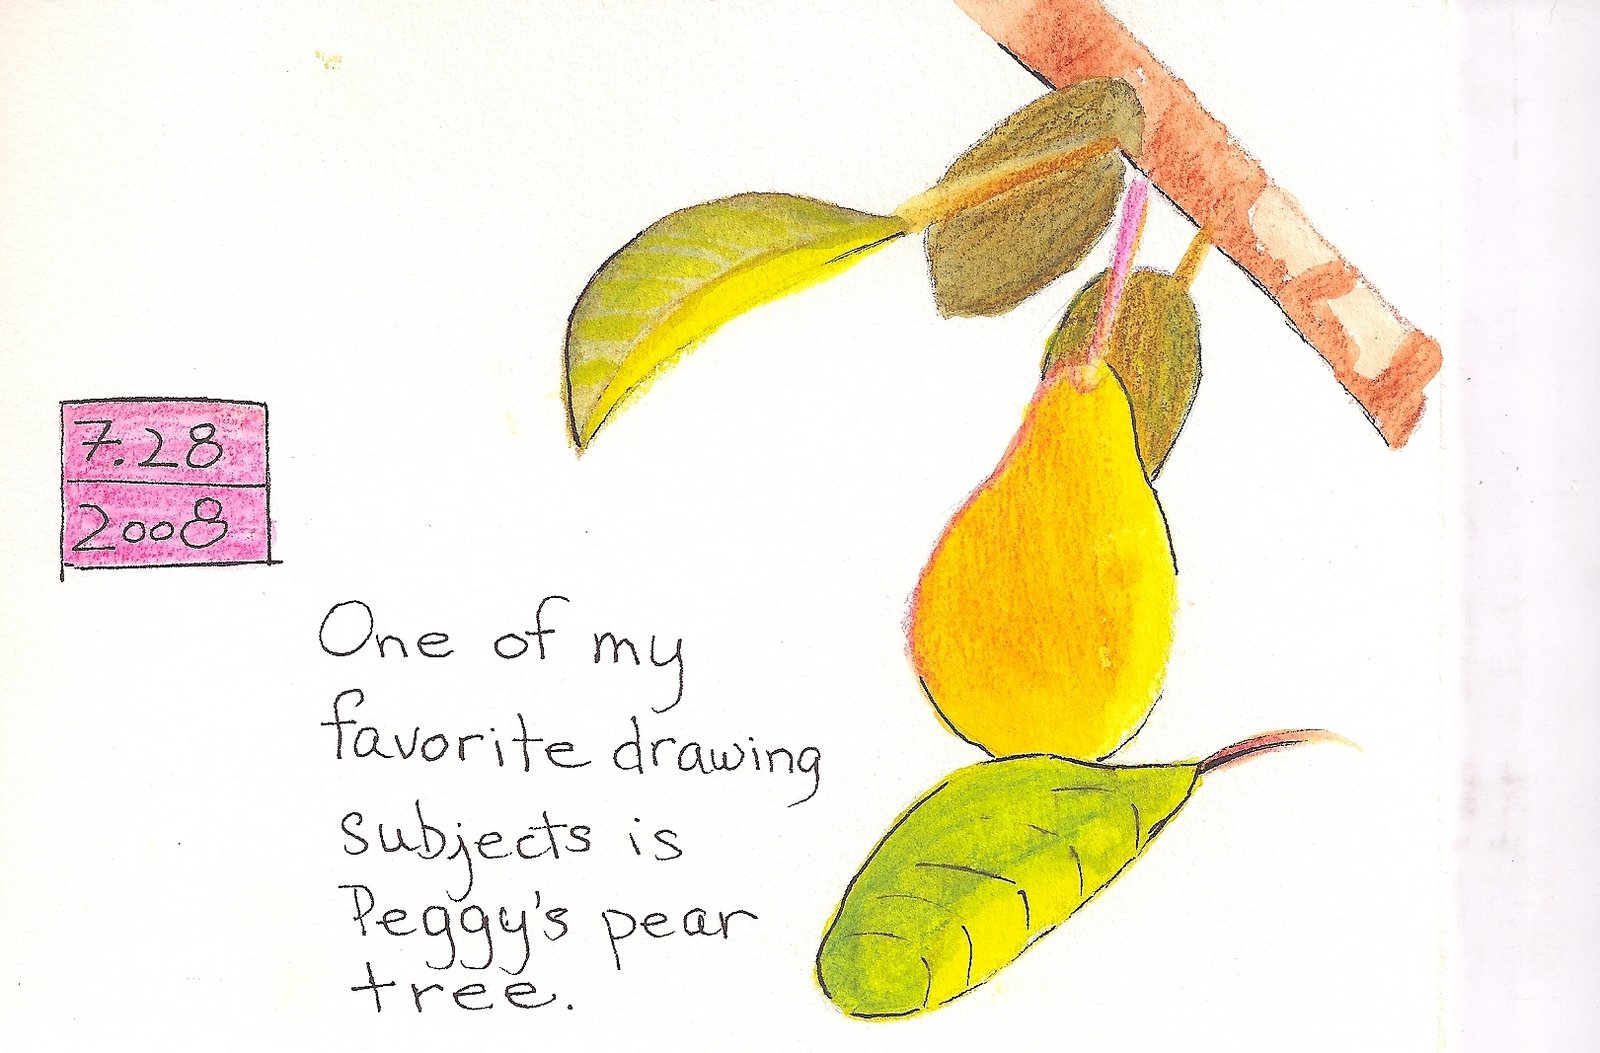 [Peggy's+pear+tree+7.29.08.jpg]